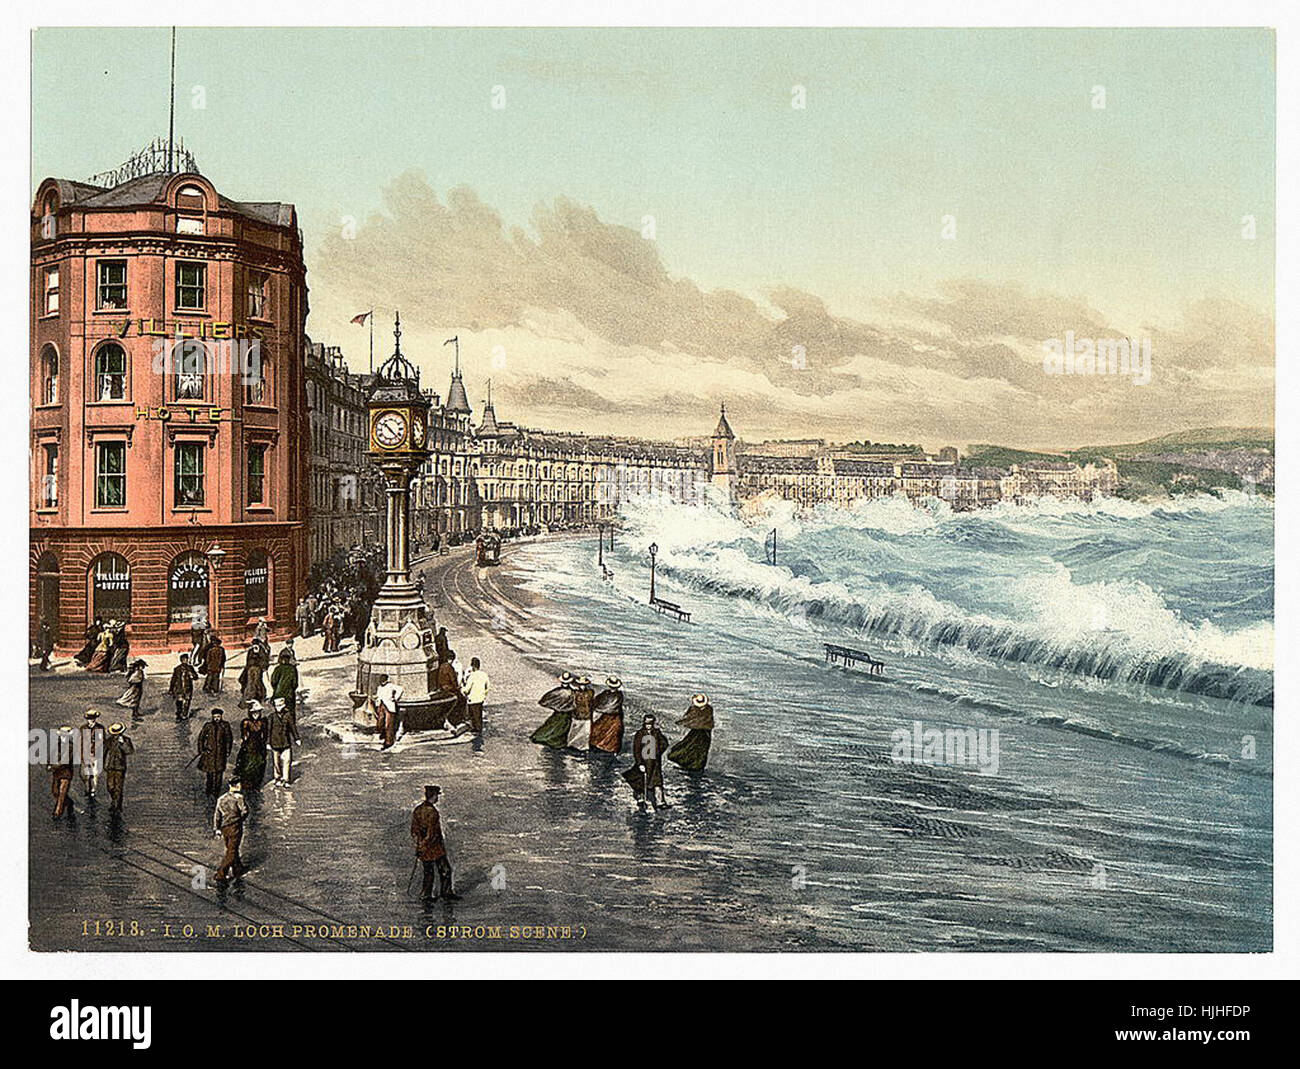 Douglas, loch promenade (storm scene), Isle of Man   - Photochrom XIXth century Stock Photo